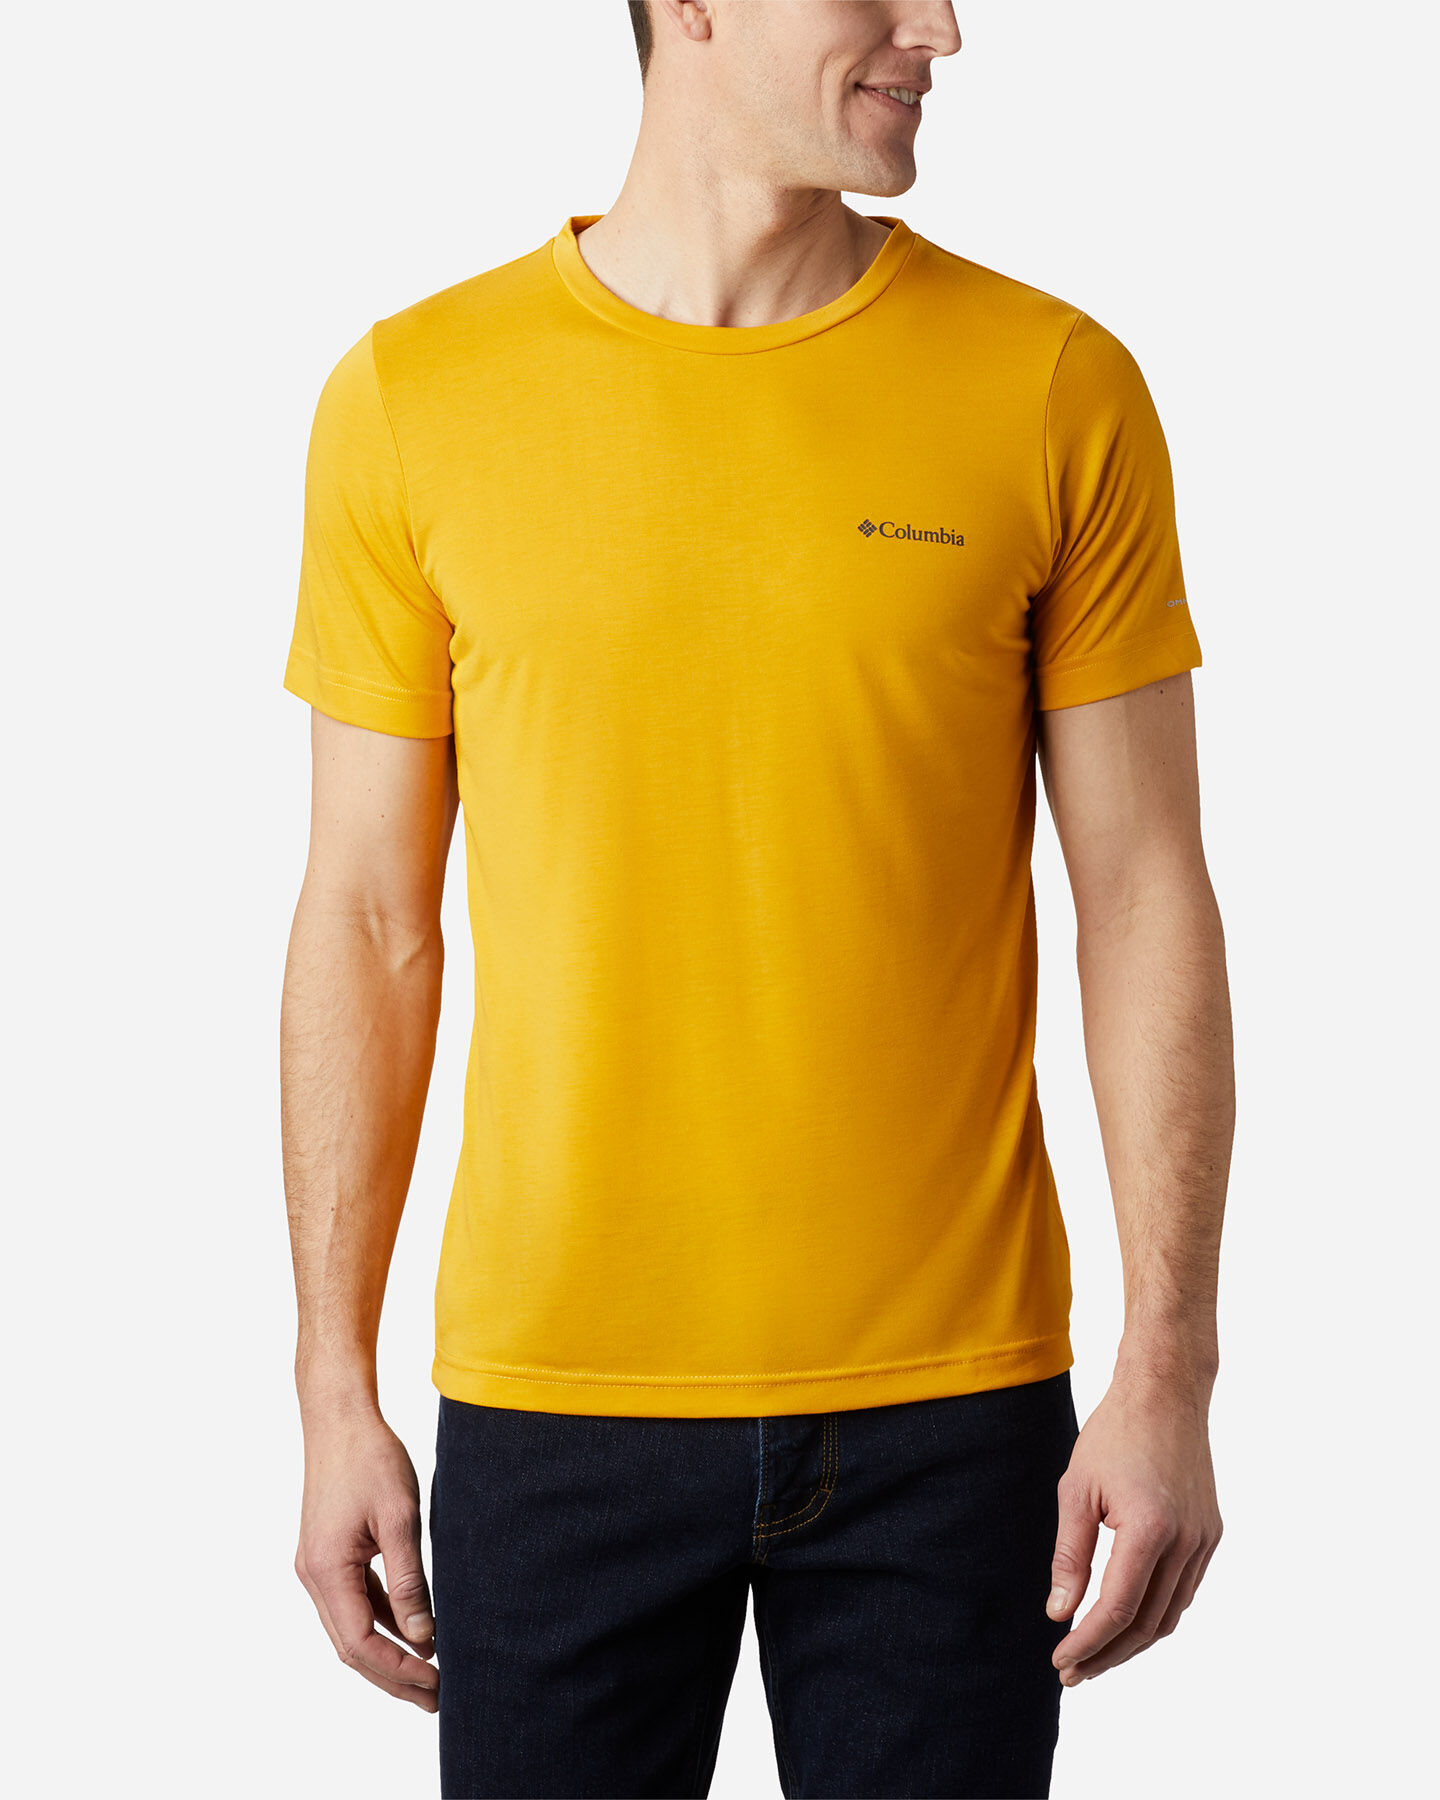  T-Shirt COLUMBIA MAXTRAIL LOGO M S5174871 scatto 1